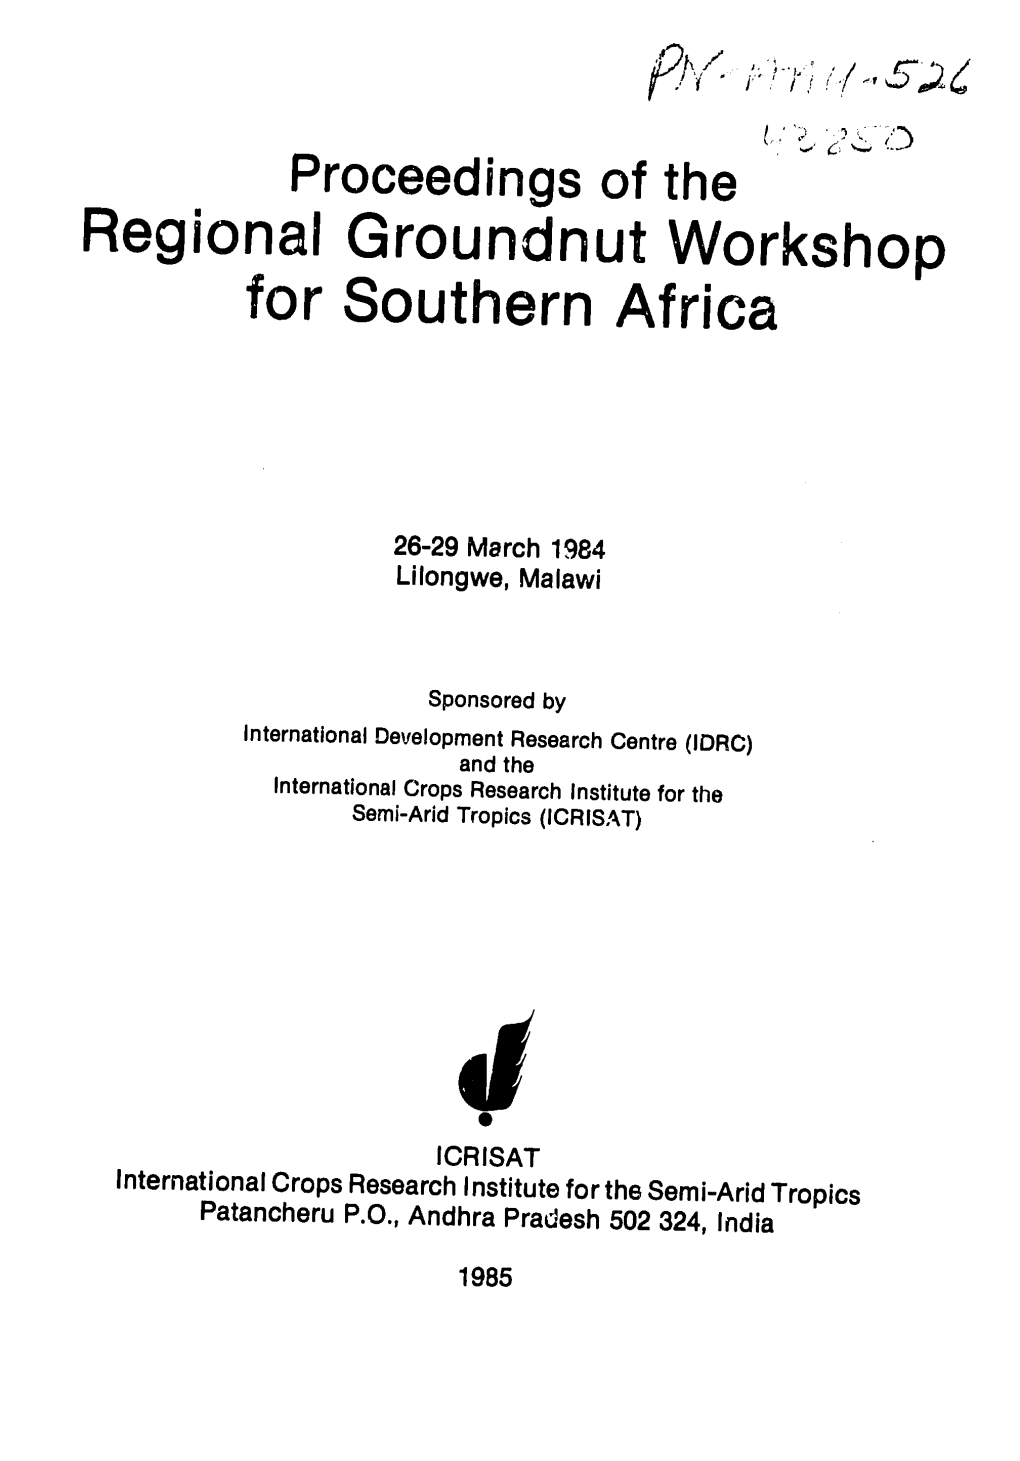 Regional Groundnut Workshop for Southern Africa